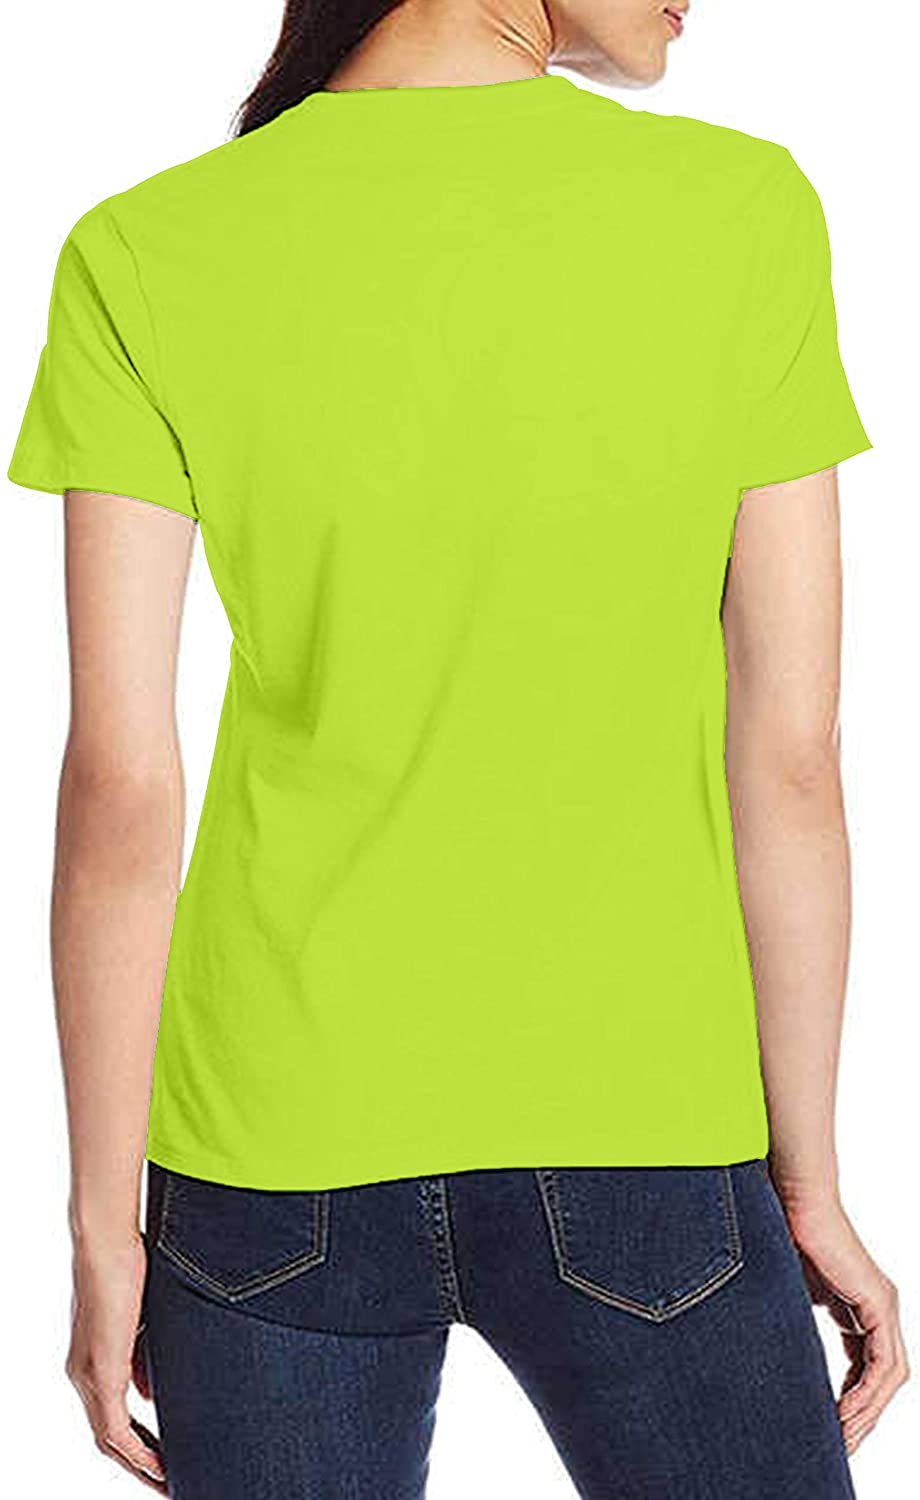 neon colors shirt